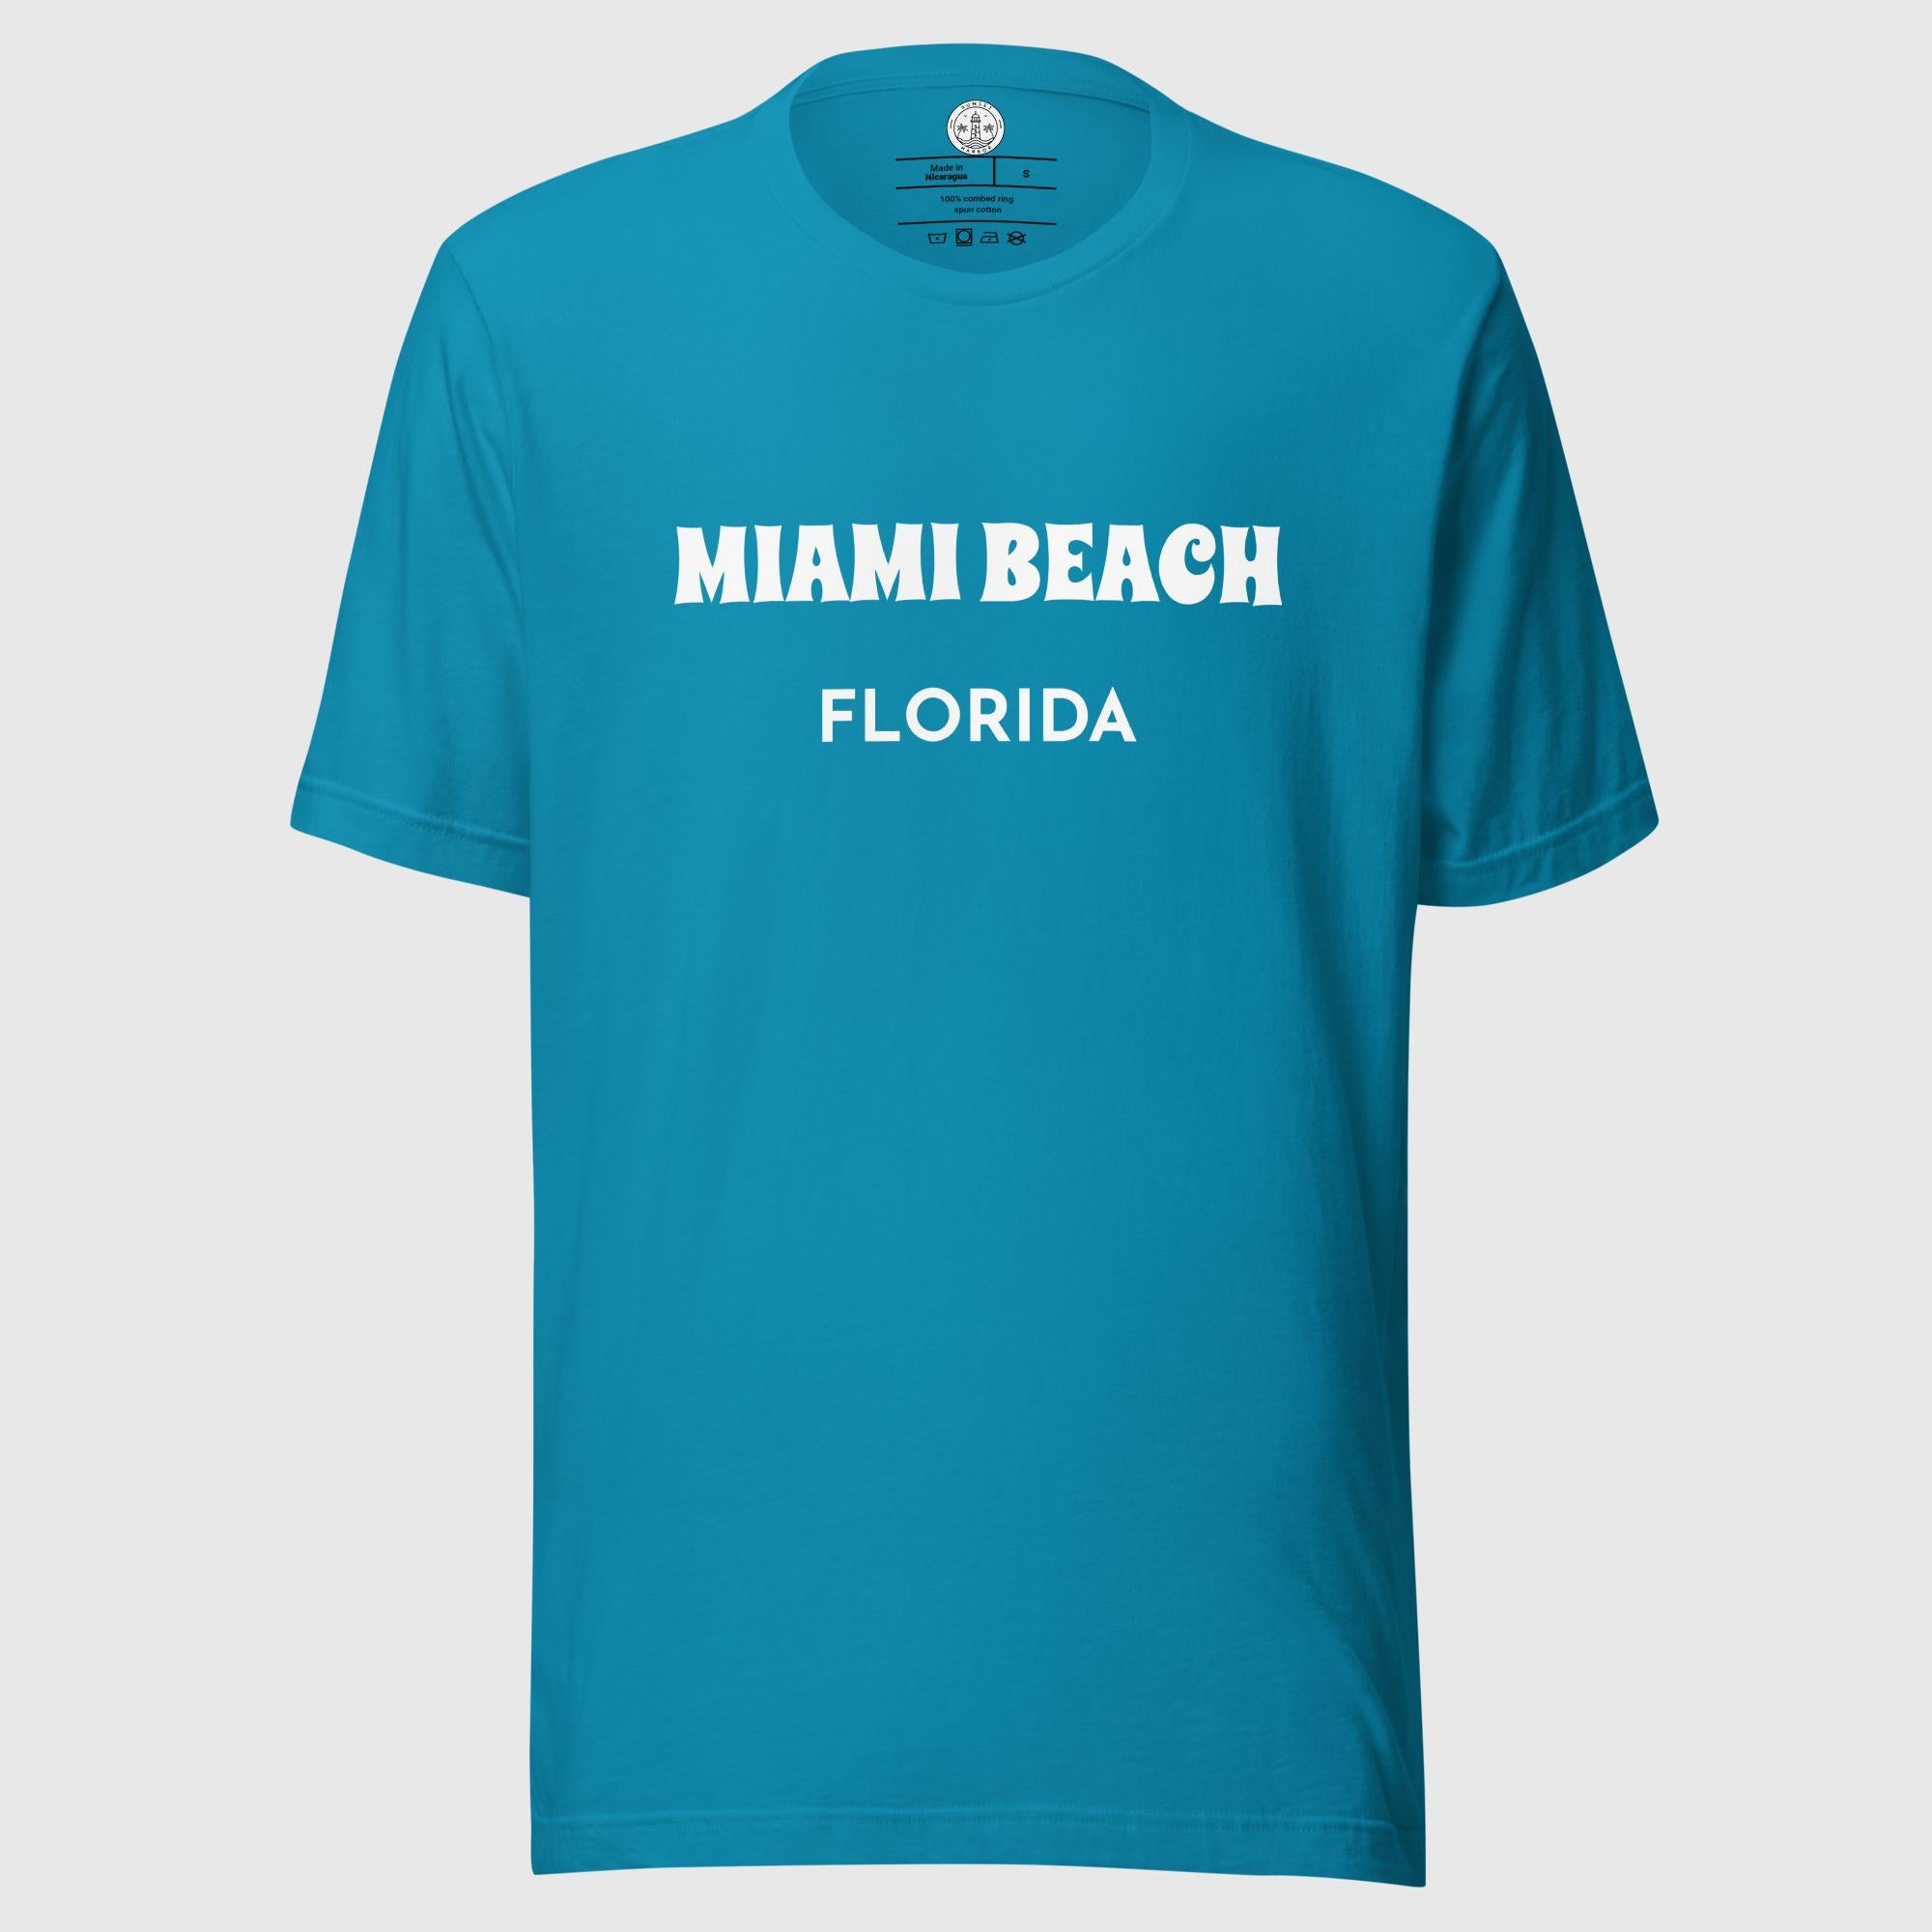 Unisex t-shirt - Miami Beach